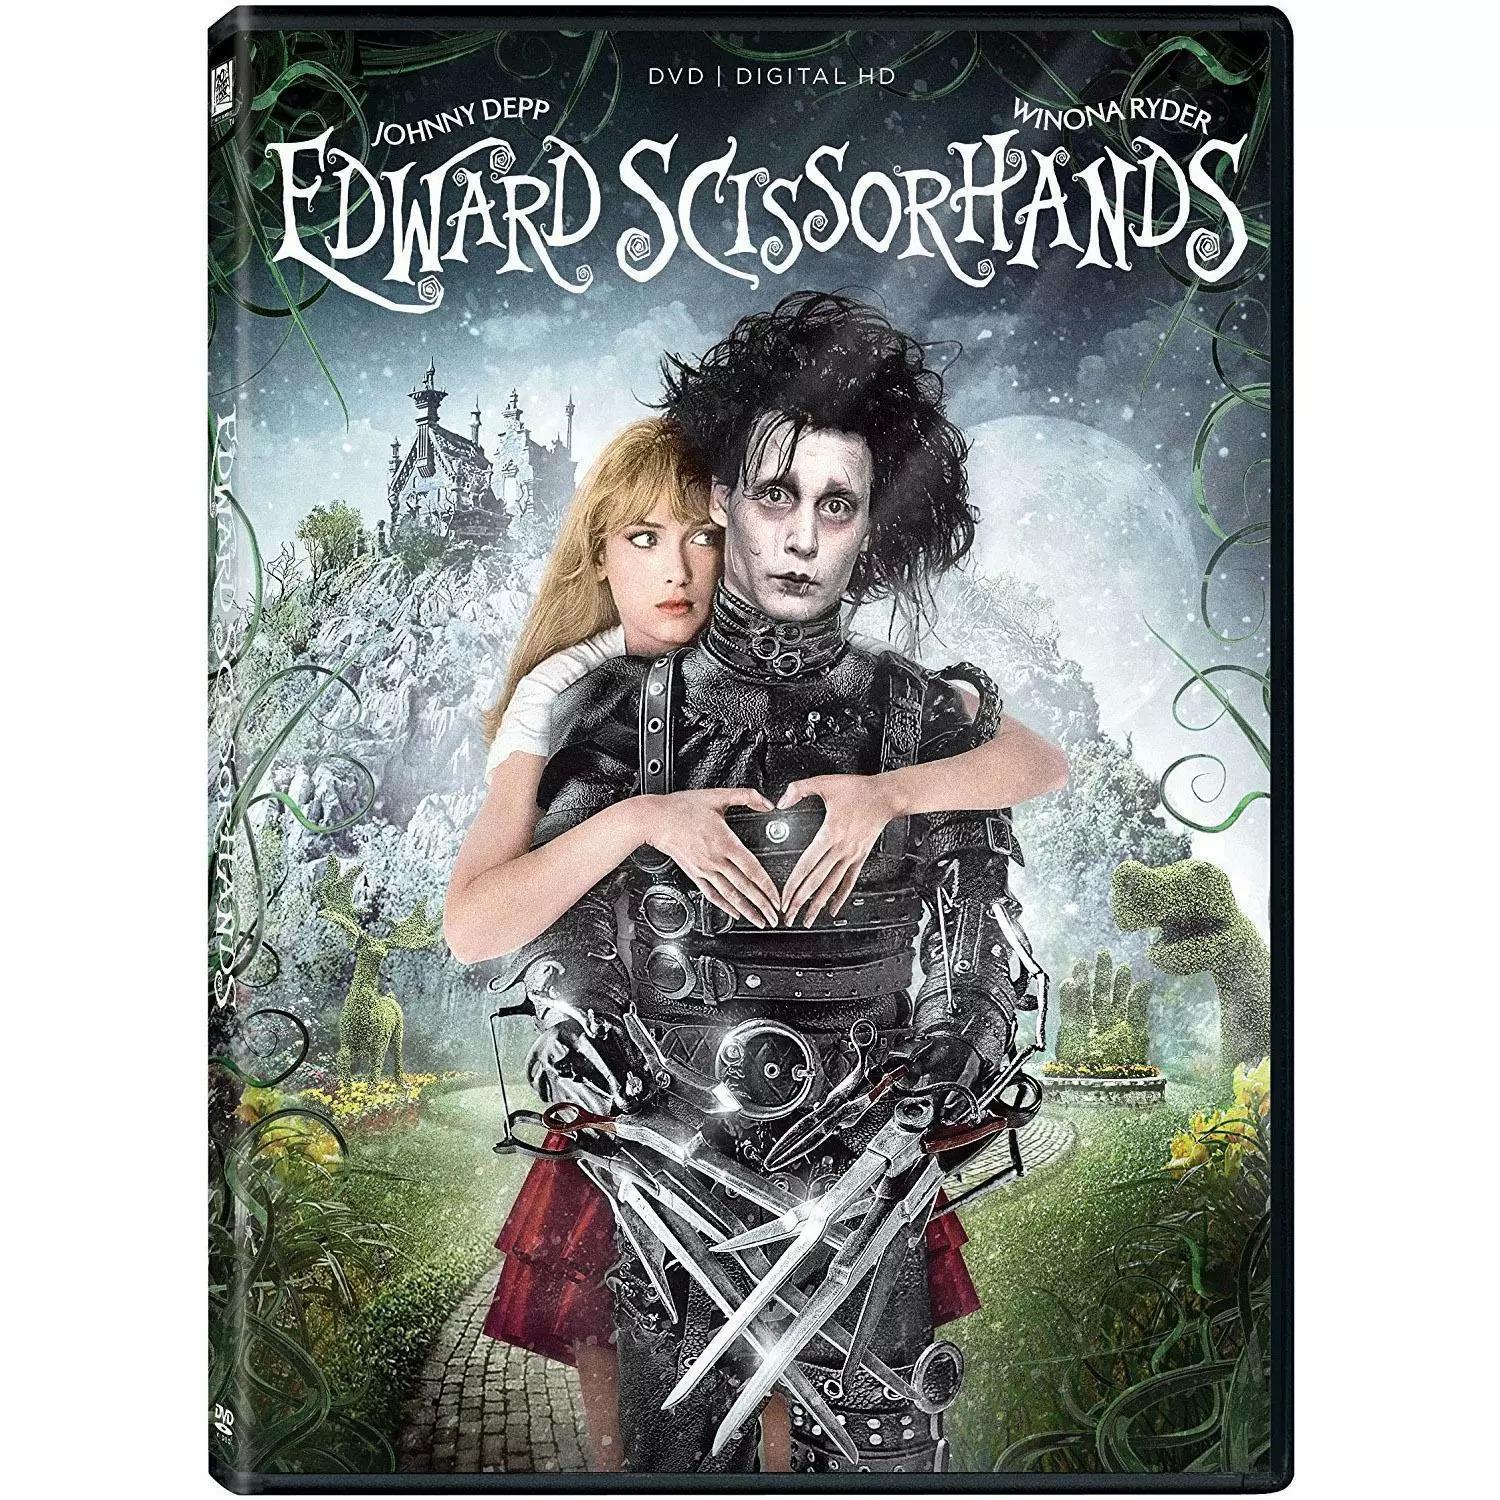 Edward Scissorhands 25th Anniversary Blu-ray for $3.99